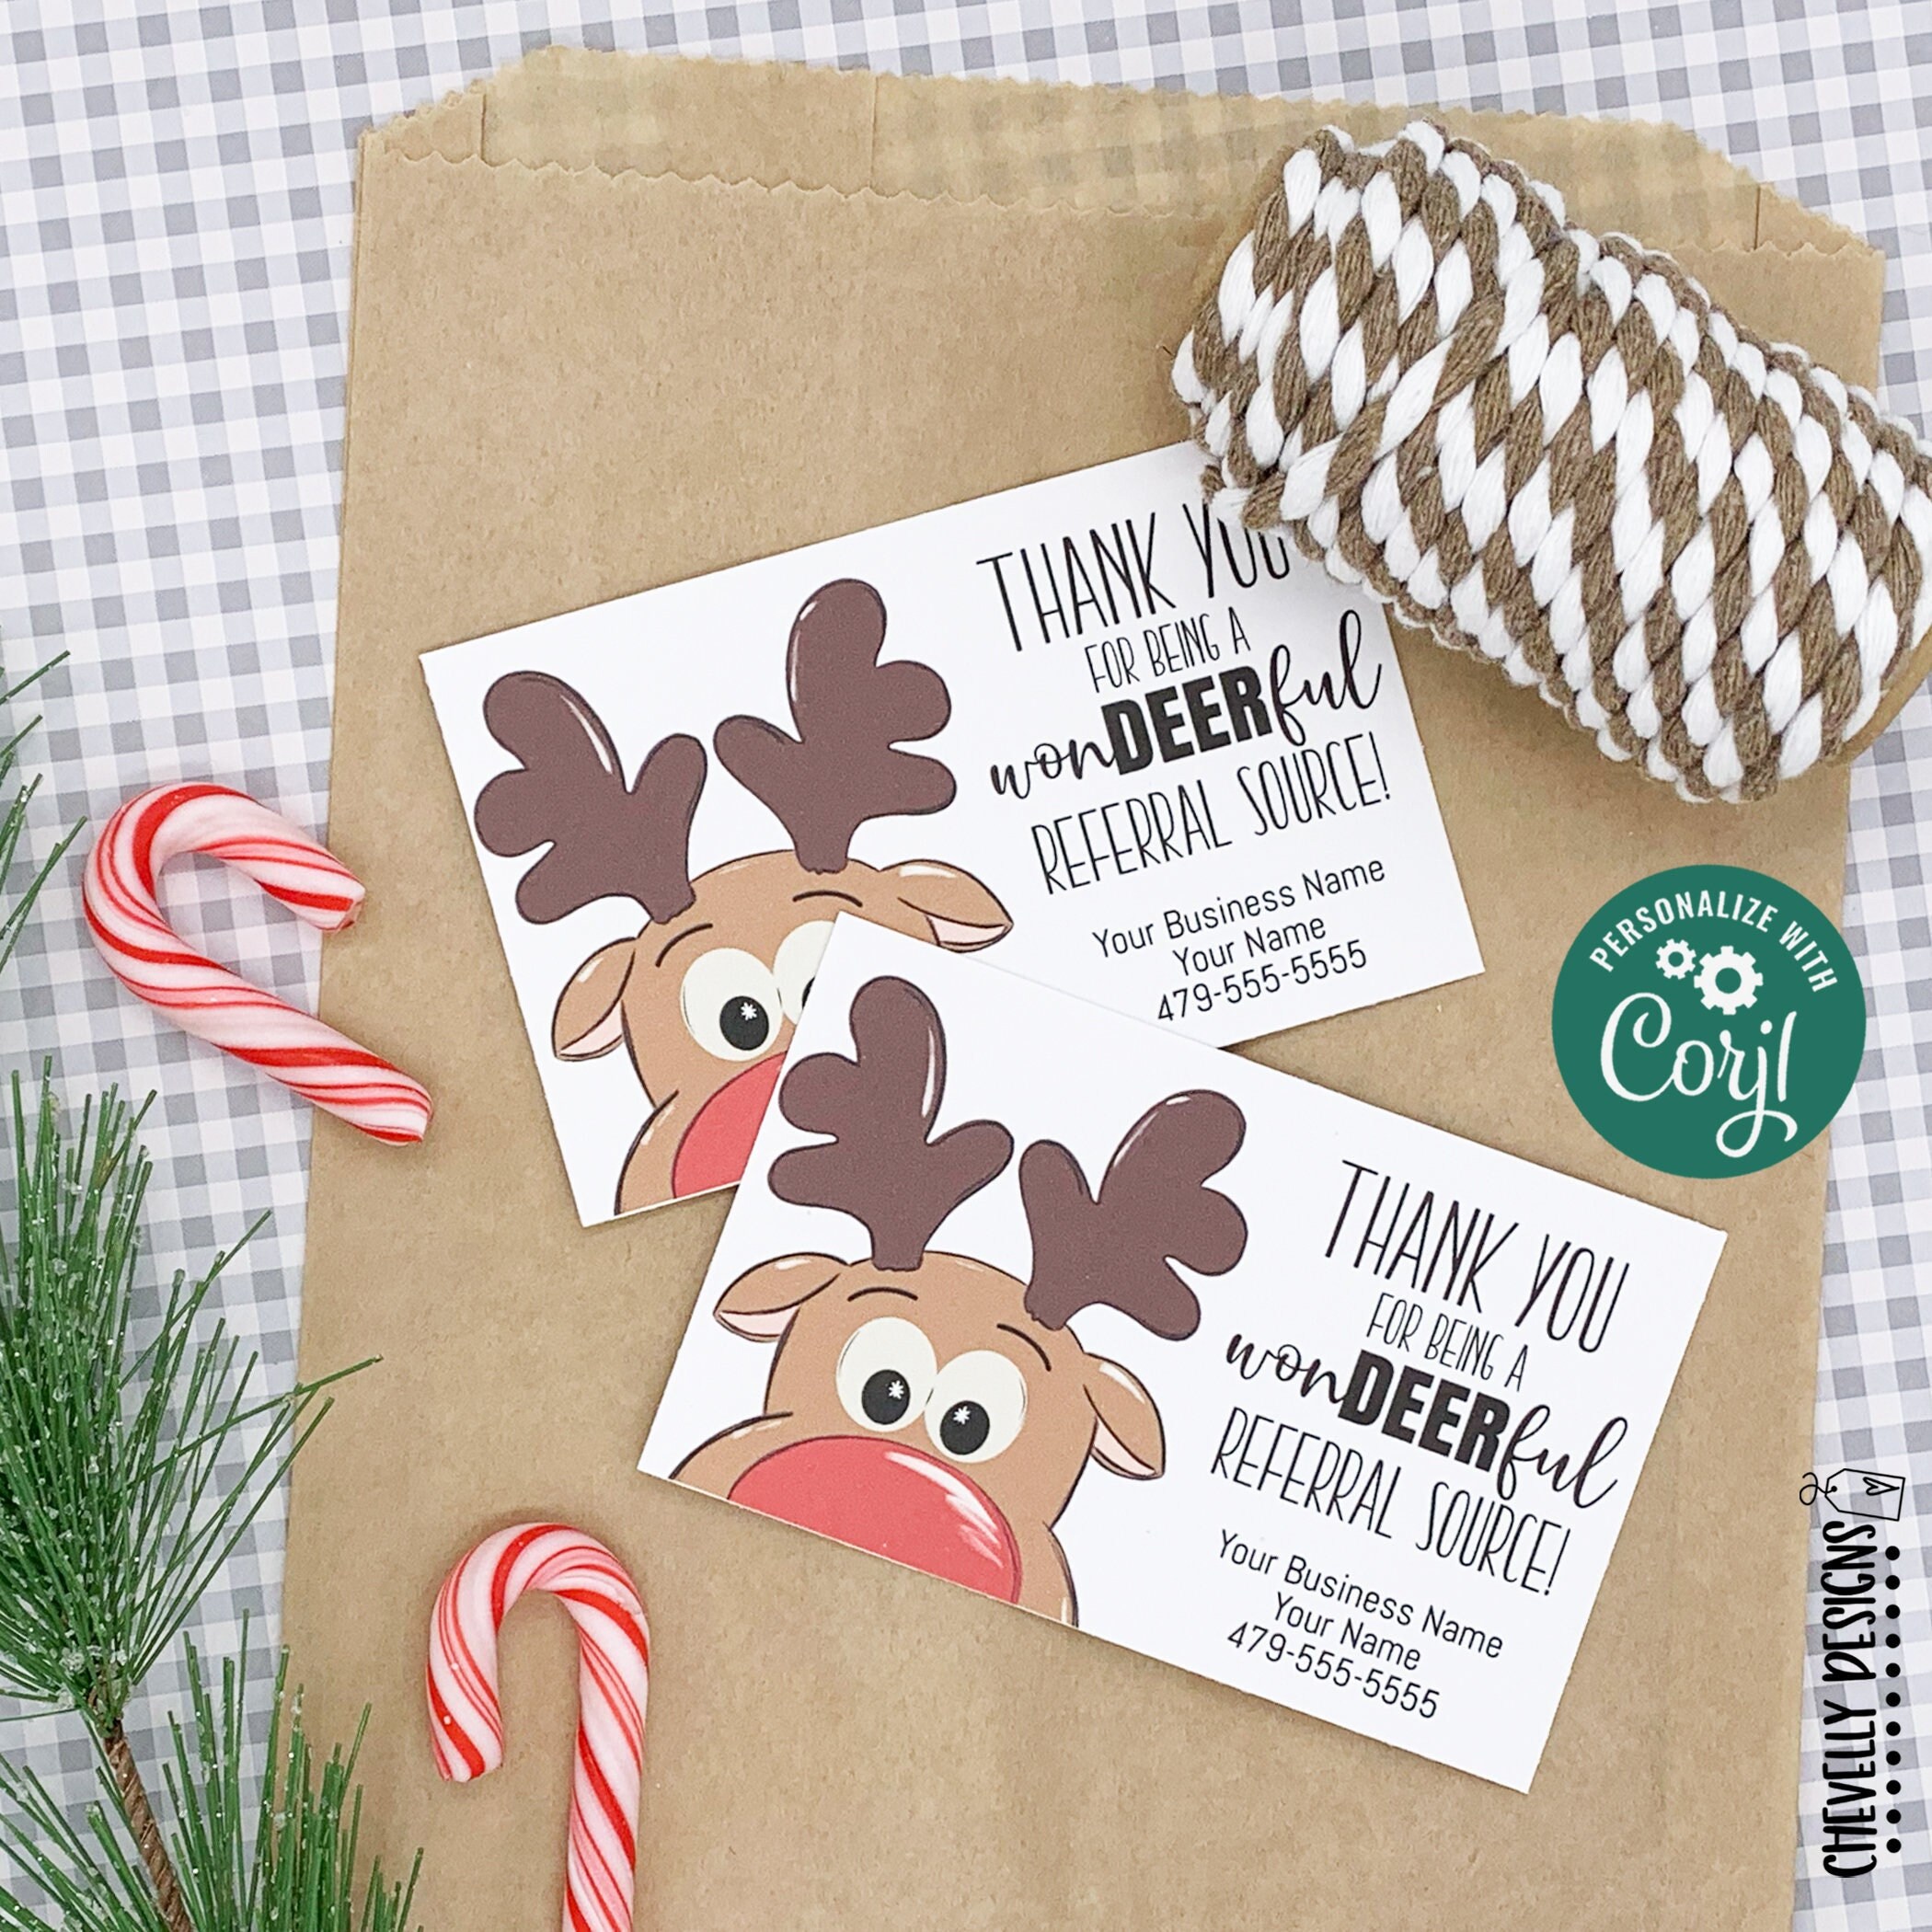 176PCS Christmas Name Tags Stickers, Christmas Gift Tags Labels Xmas Tree  Deer Festival Birthday Holiday Decor